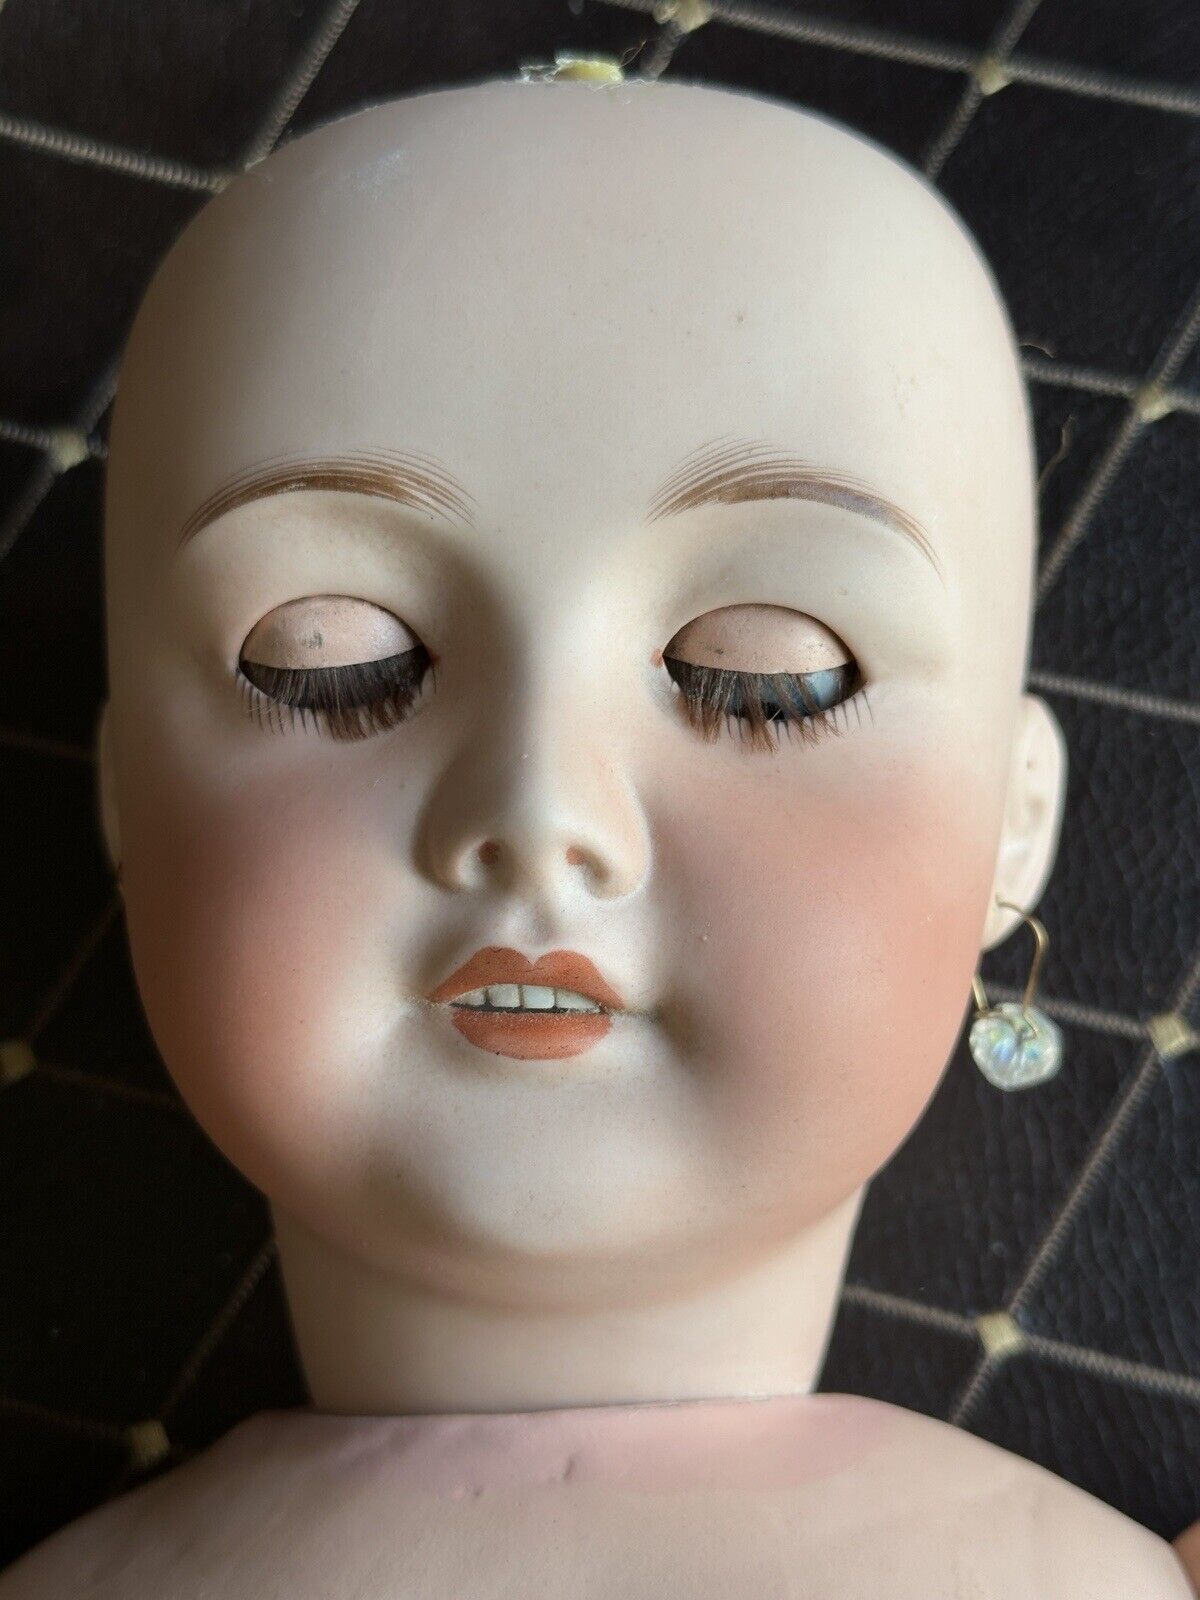 Large Antique French 26” SFBJ 301 Bisque Head Bride Doll Working Crier